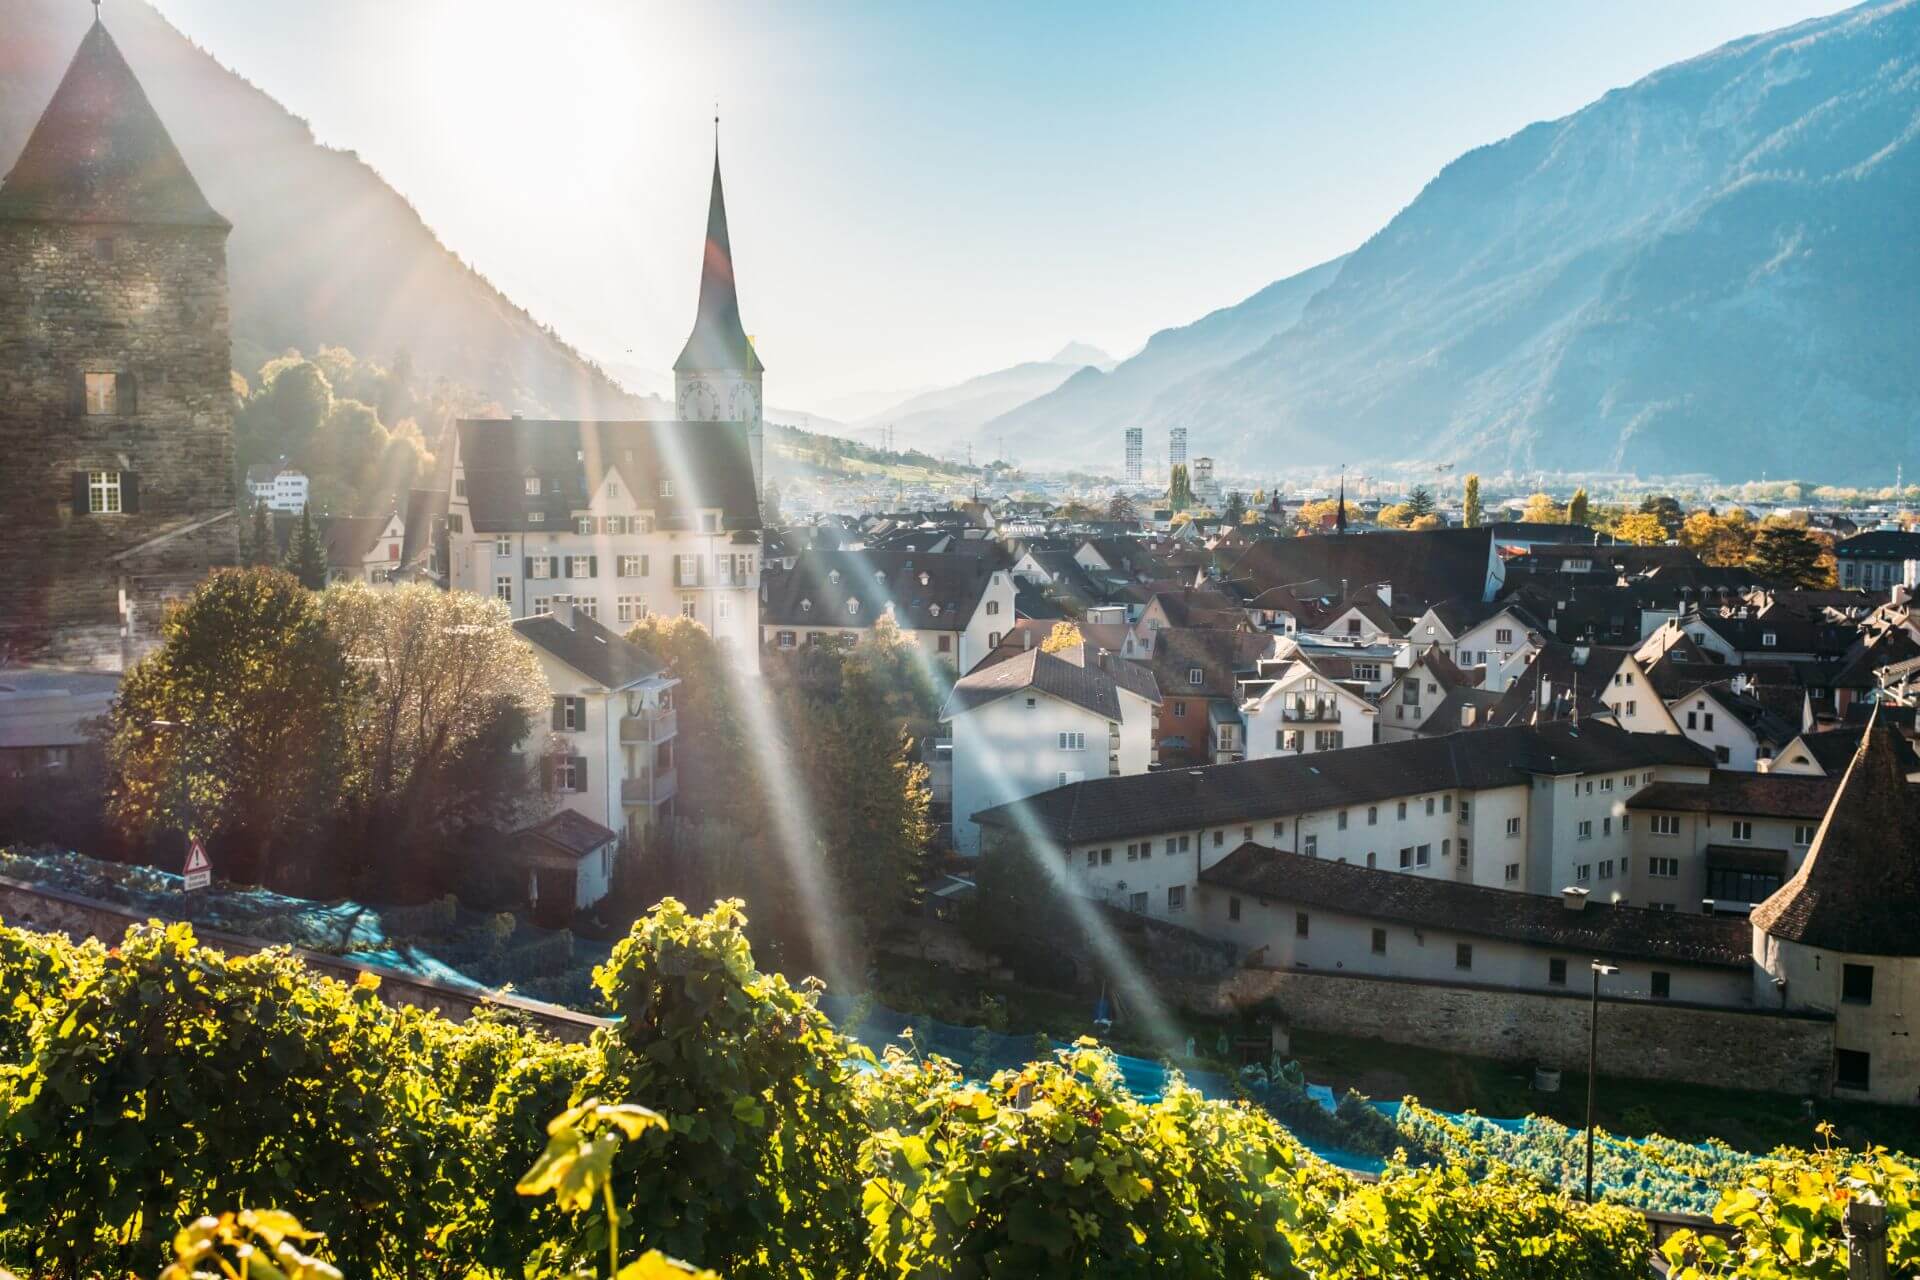 Chur is the oldest Swiss city